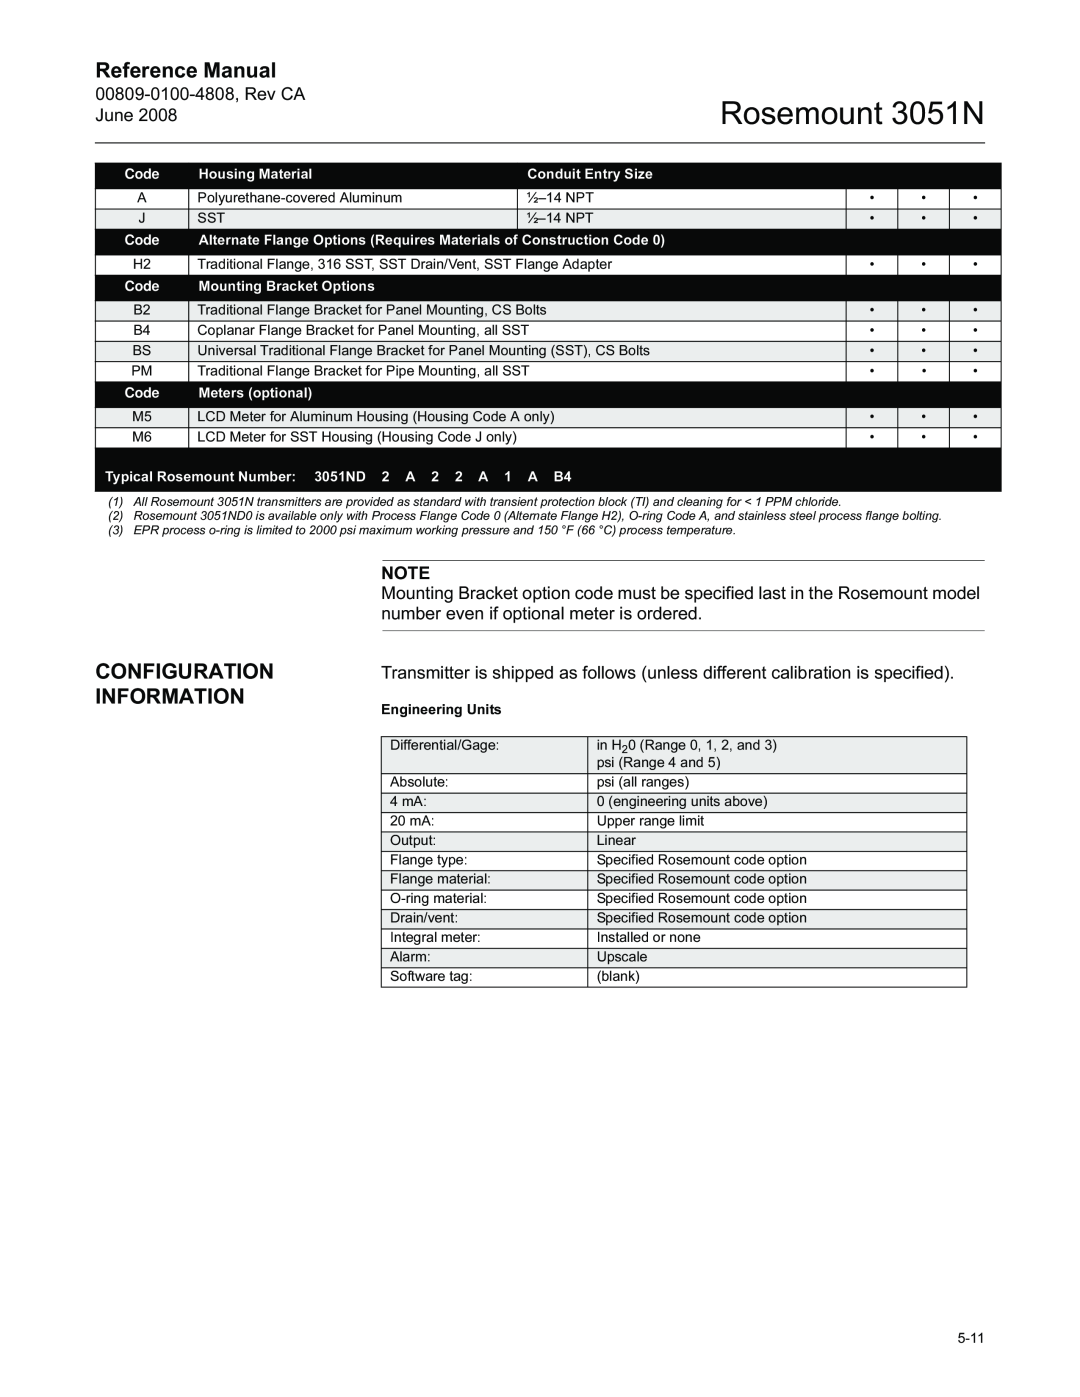 Emerson manual Configuration Information, Rosemount 3051N, Reference Manual 